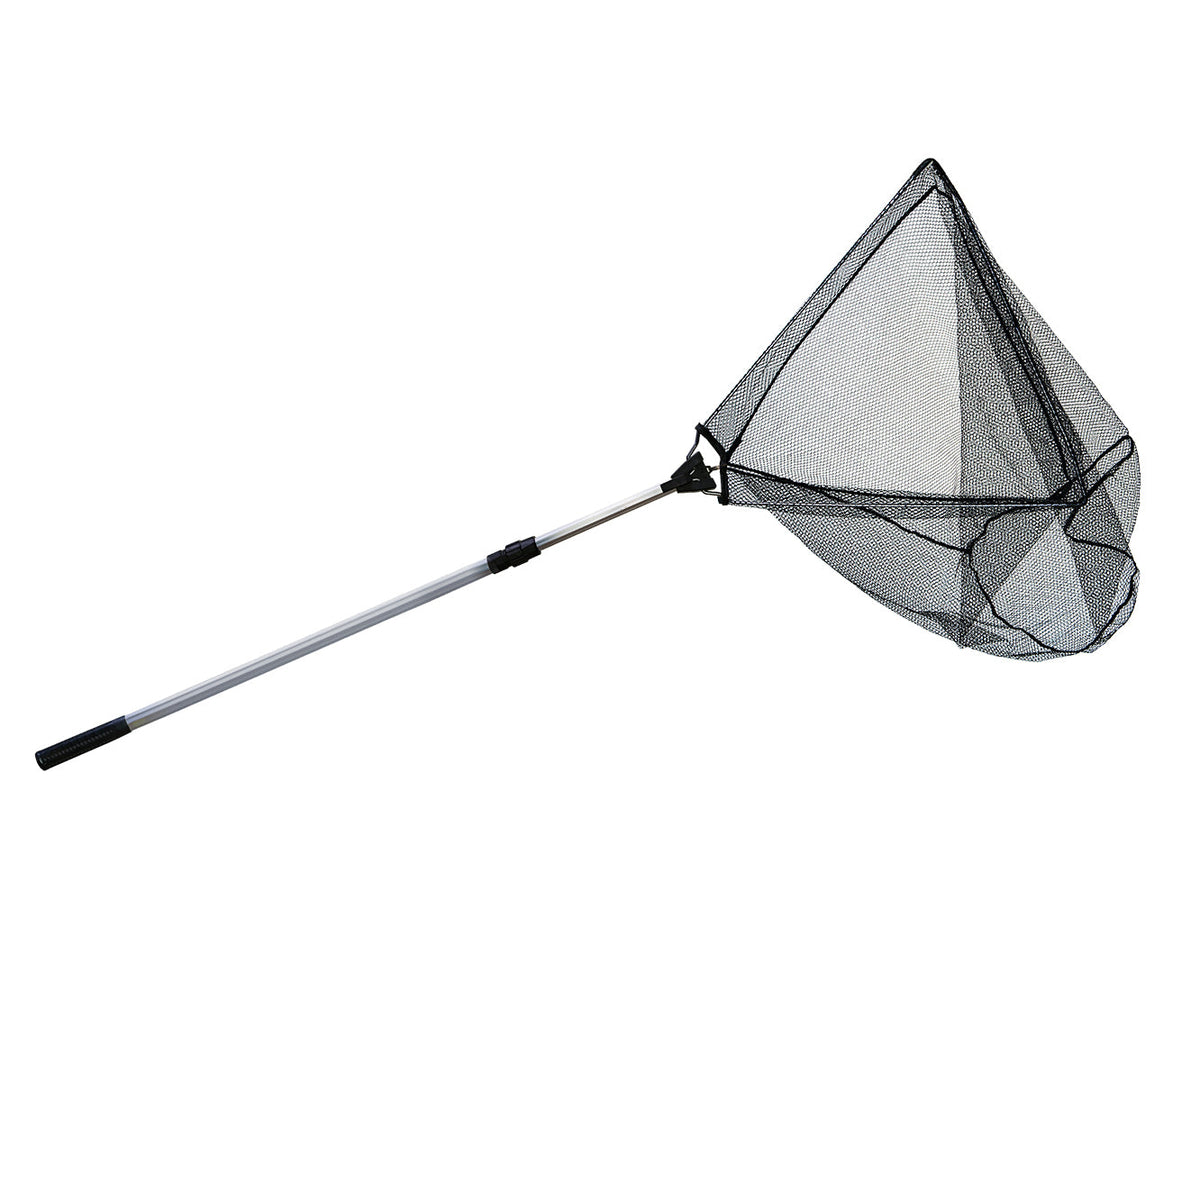 Telescopic Fish Landing Net Portable Catch Release Net Folding